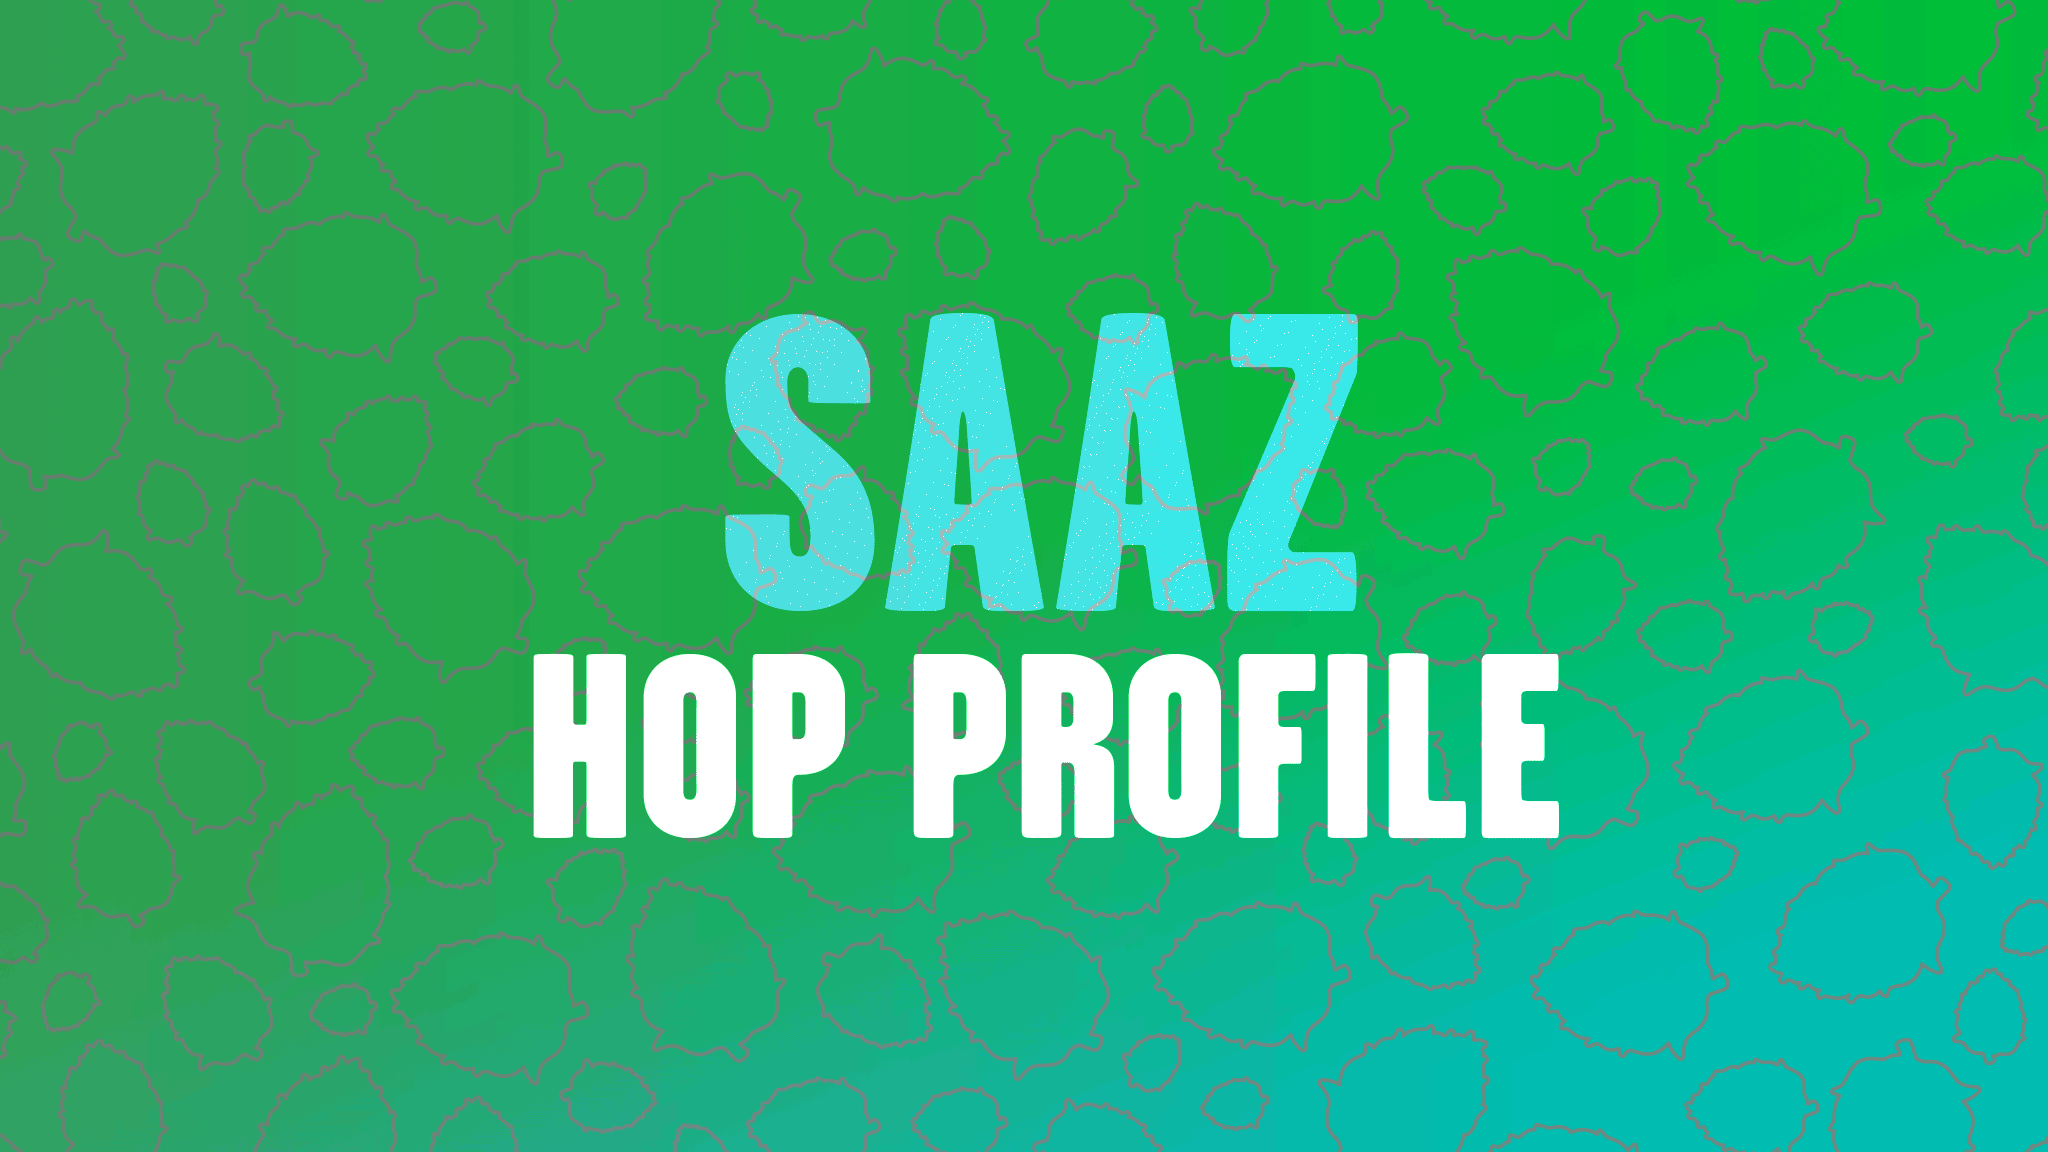 Hop Profile: Saaz